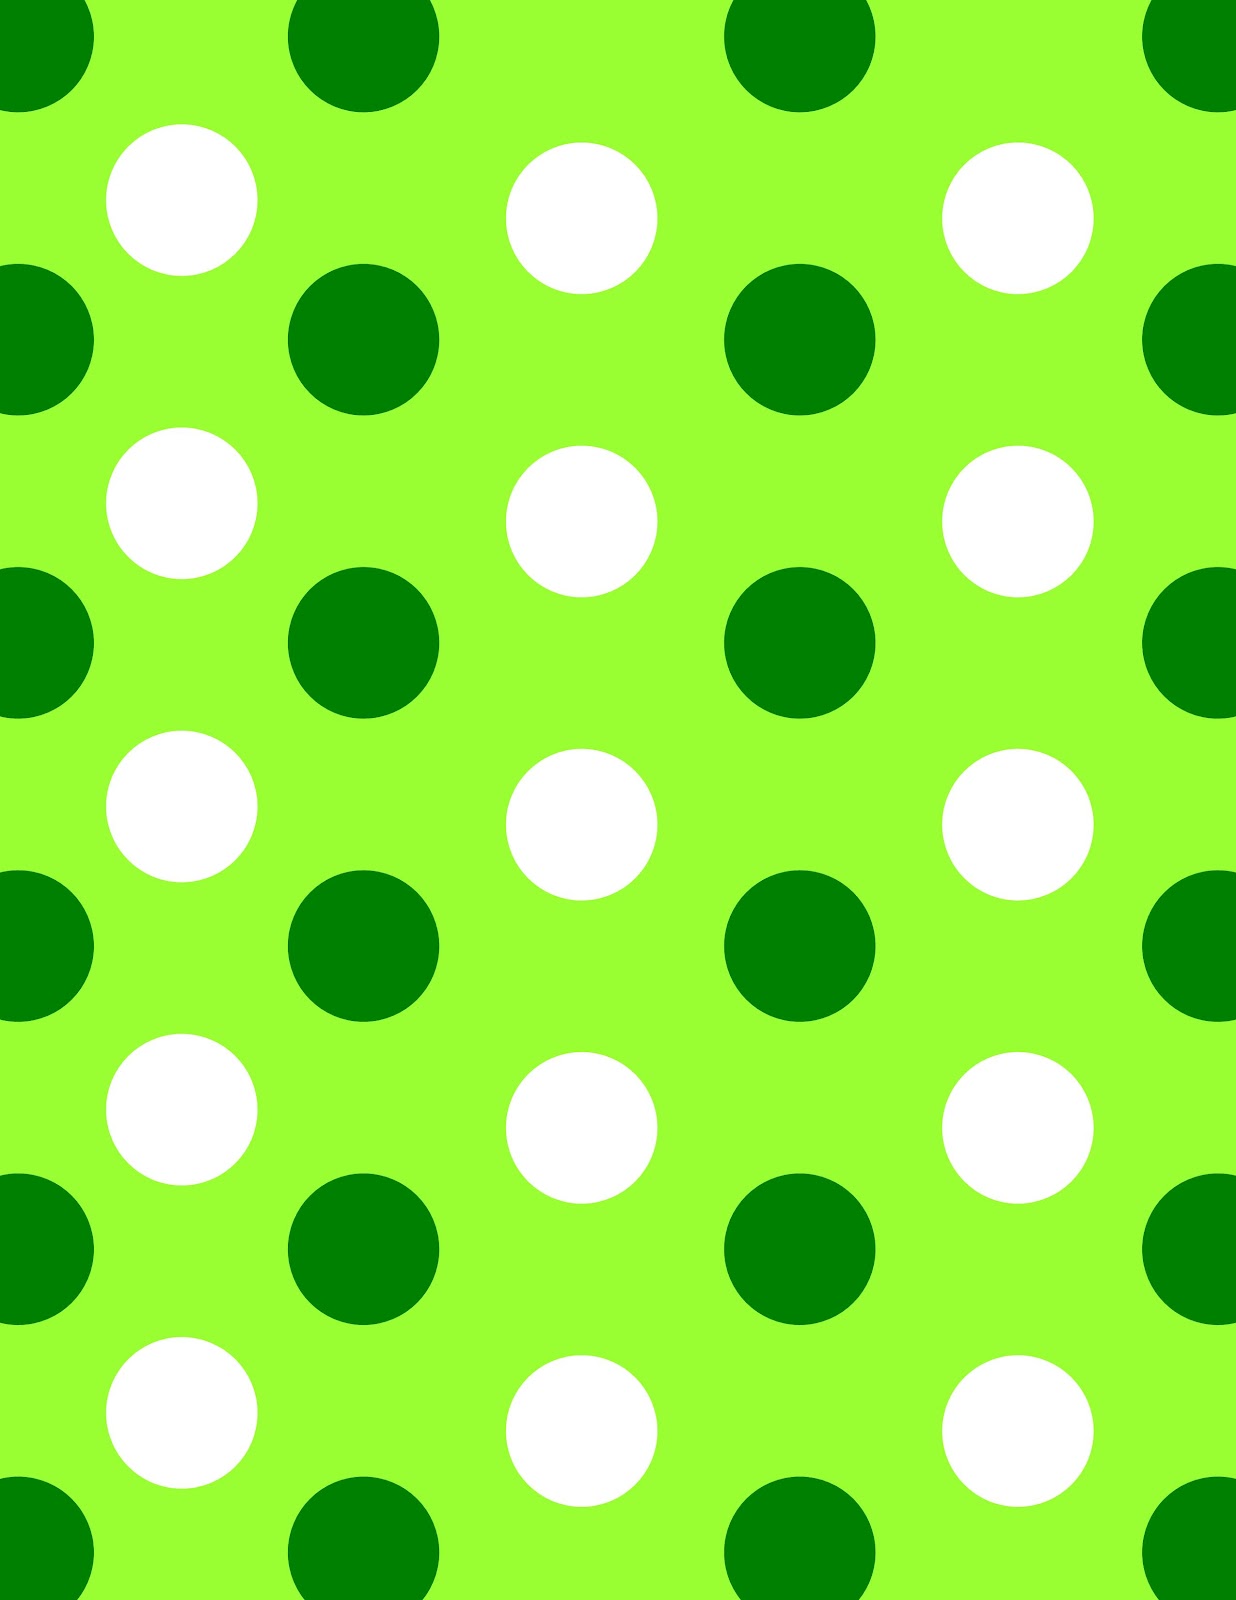 Green and purple polka dot wallpaper clipart